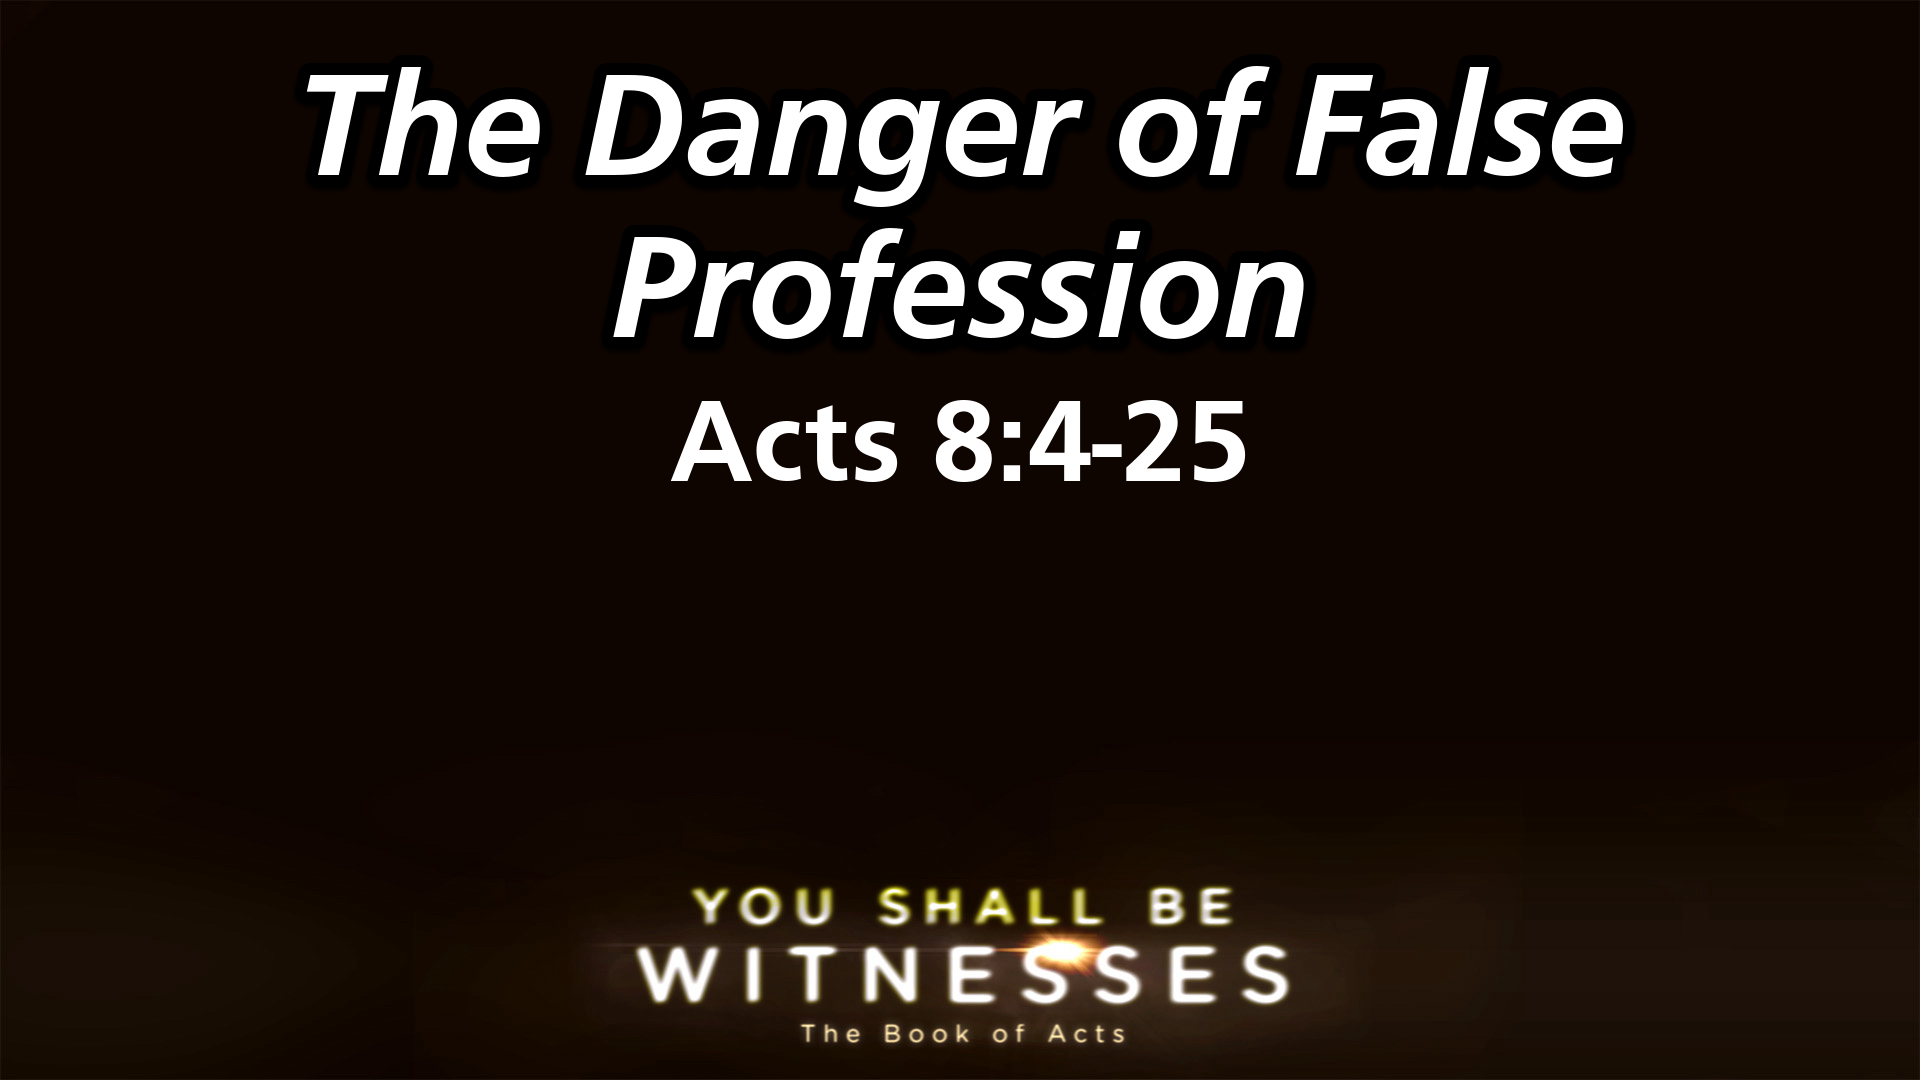 "The Danger of False Profession"